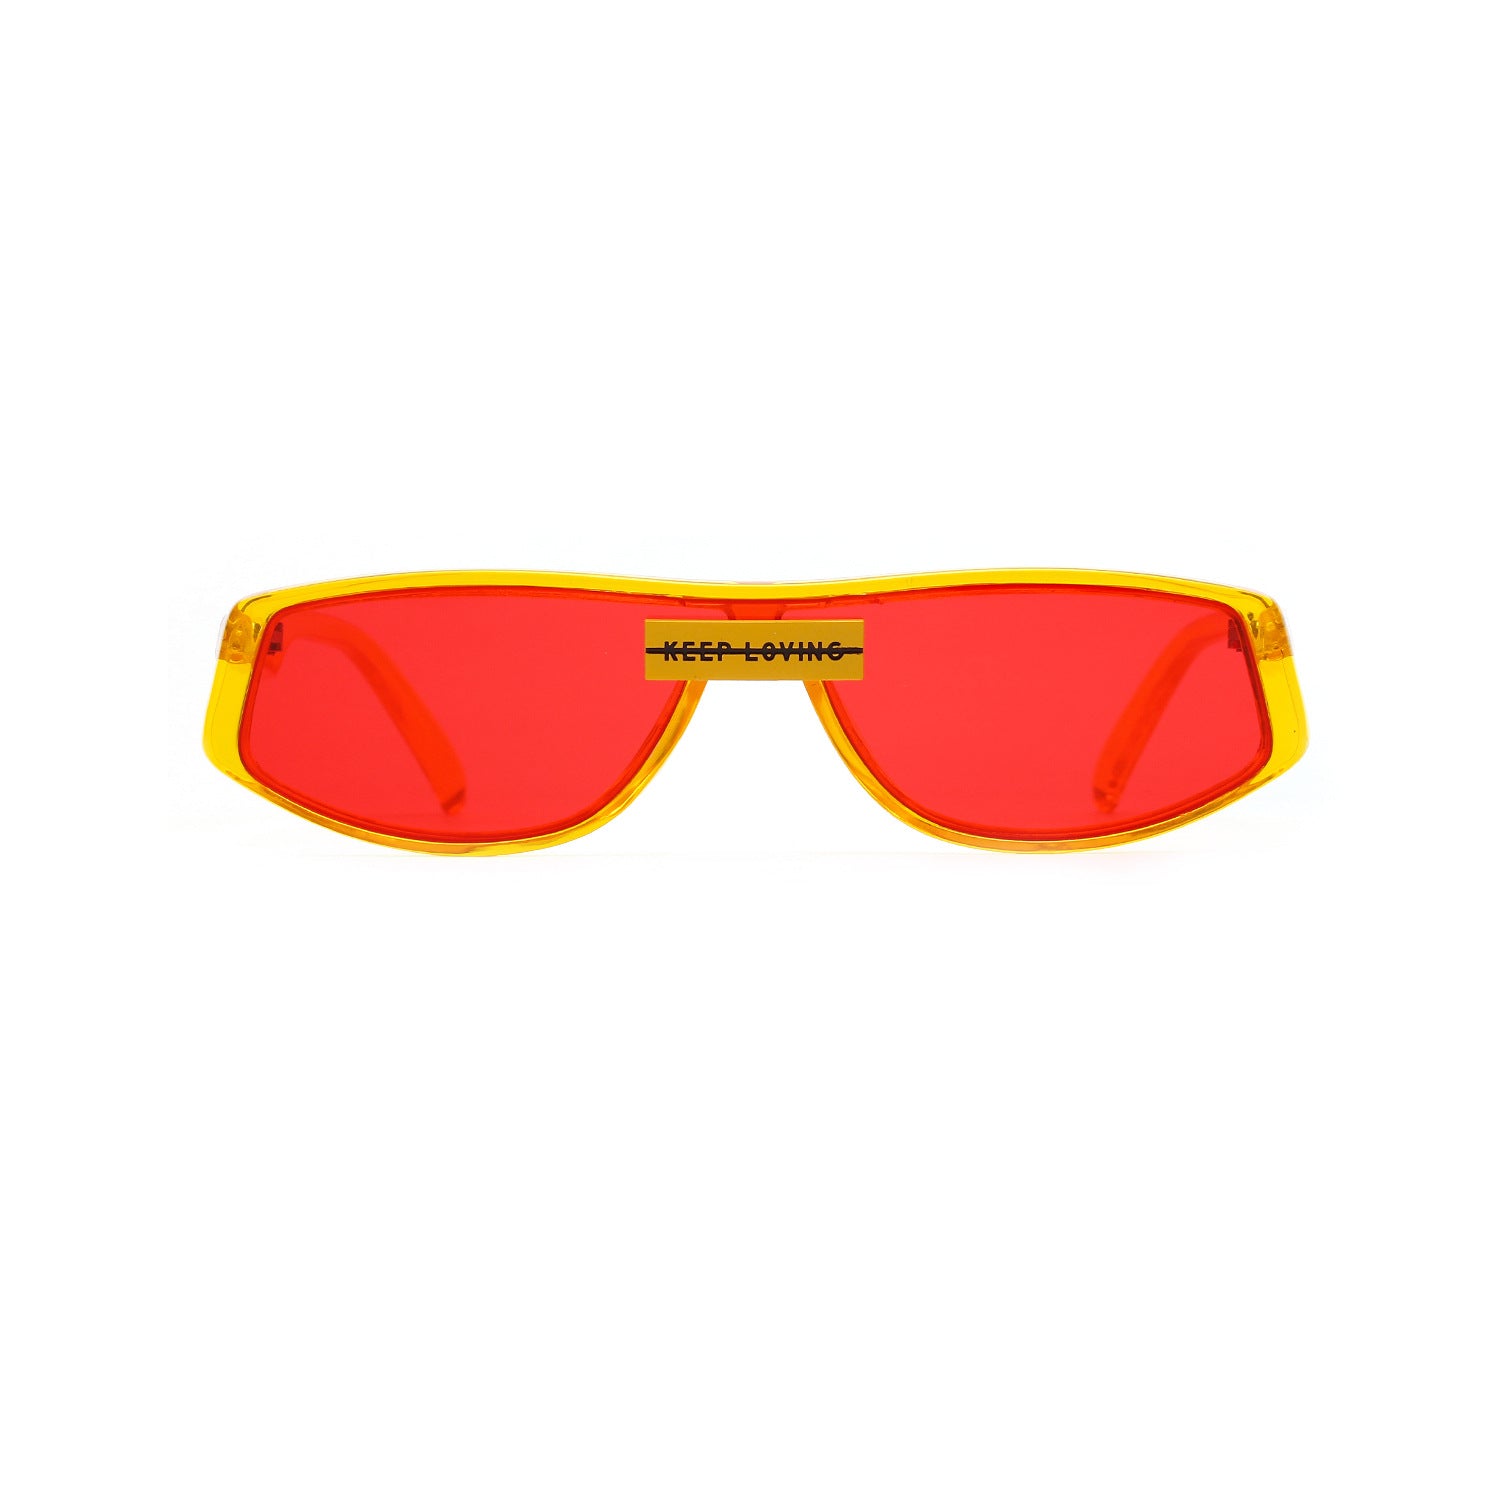 Retro square sunglasses  sunglasses Thecurvestory